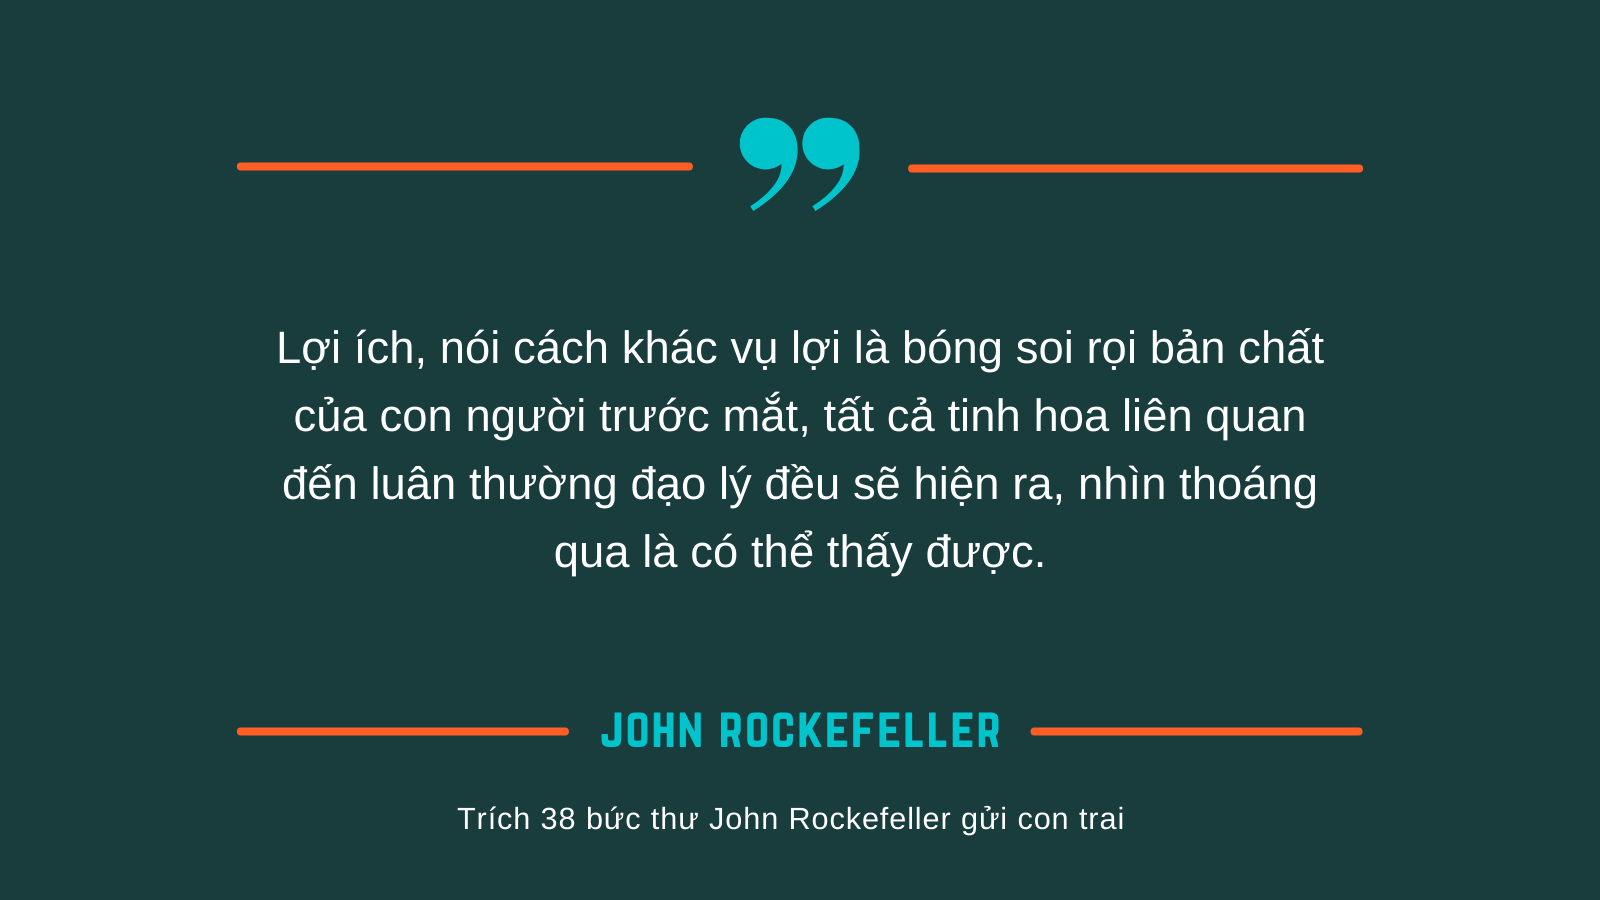 38 buc thu gui con trai cua John Rockefeller 6